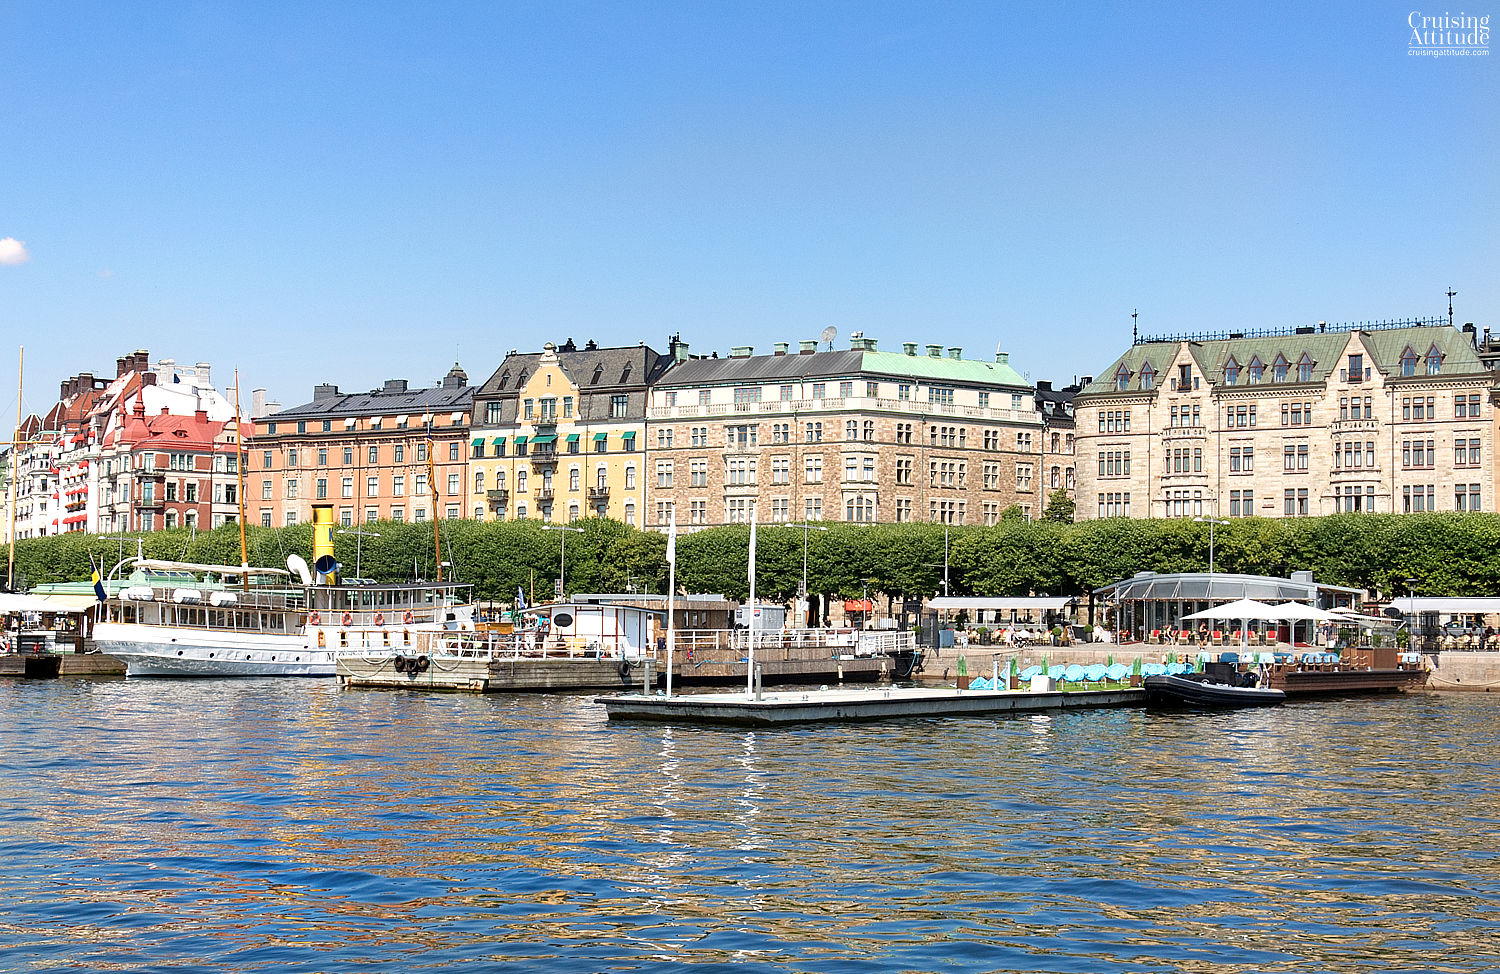 Stockholm City Visit - Cruising Attitude Sailing Blog | Discovery 55